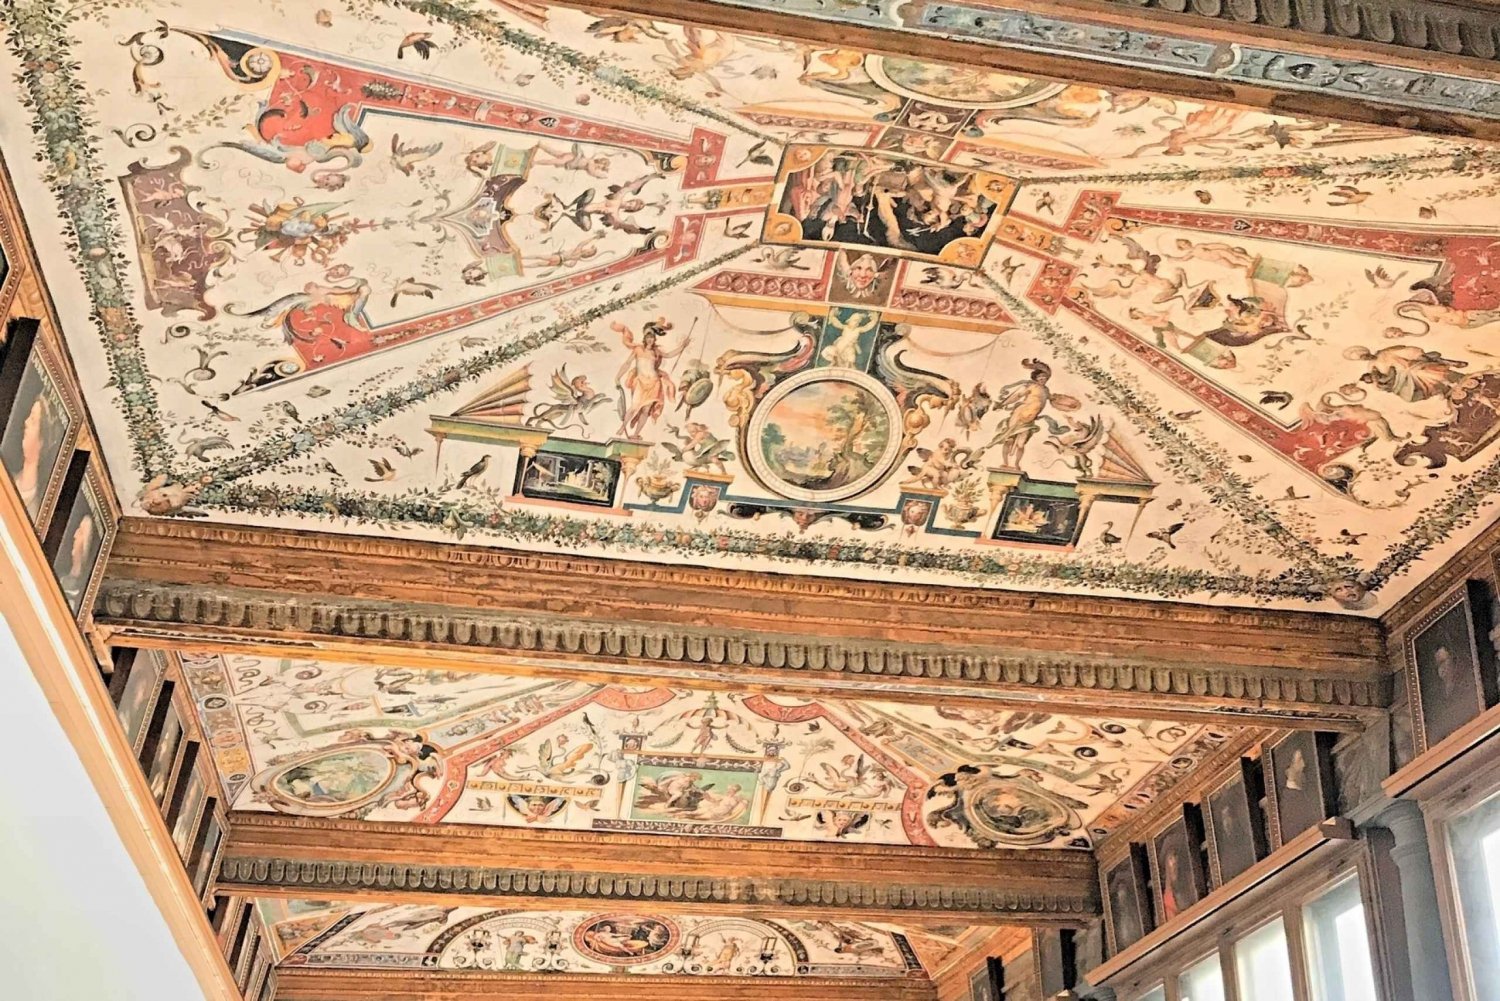 Firenze: Uffiziene - hopp over køen med guidet omvisning i galleriet